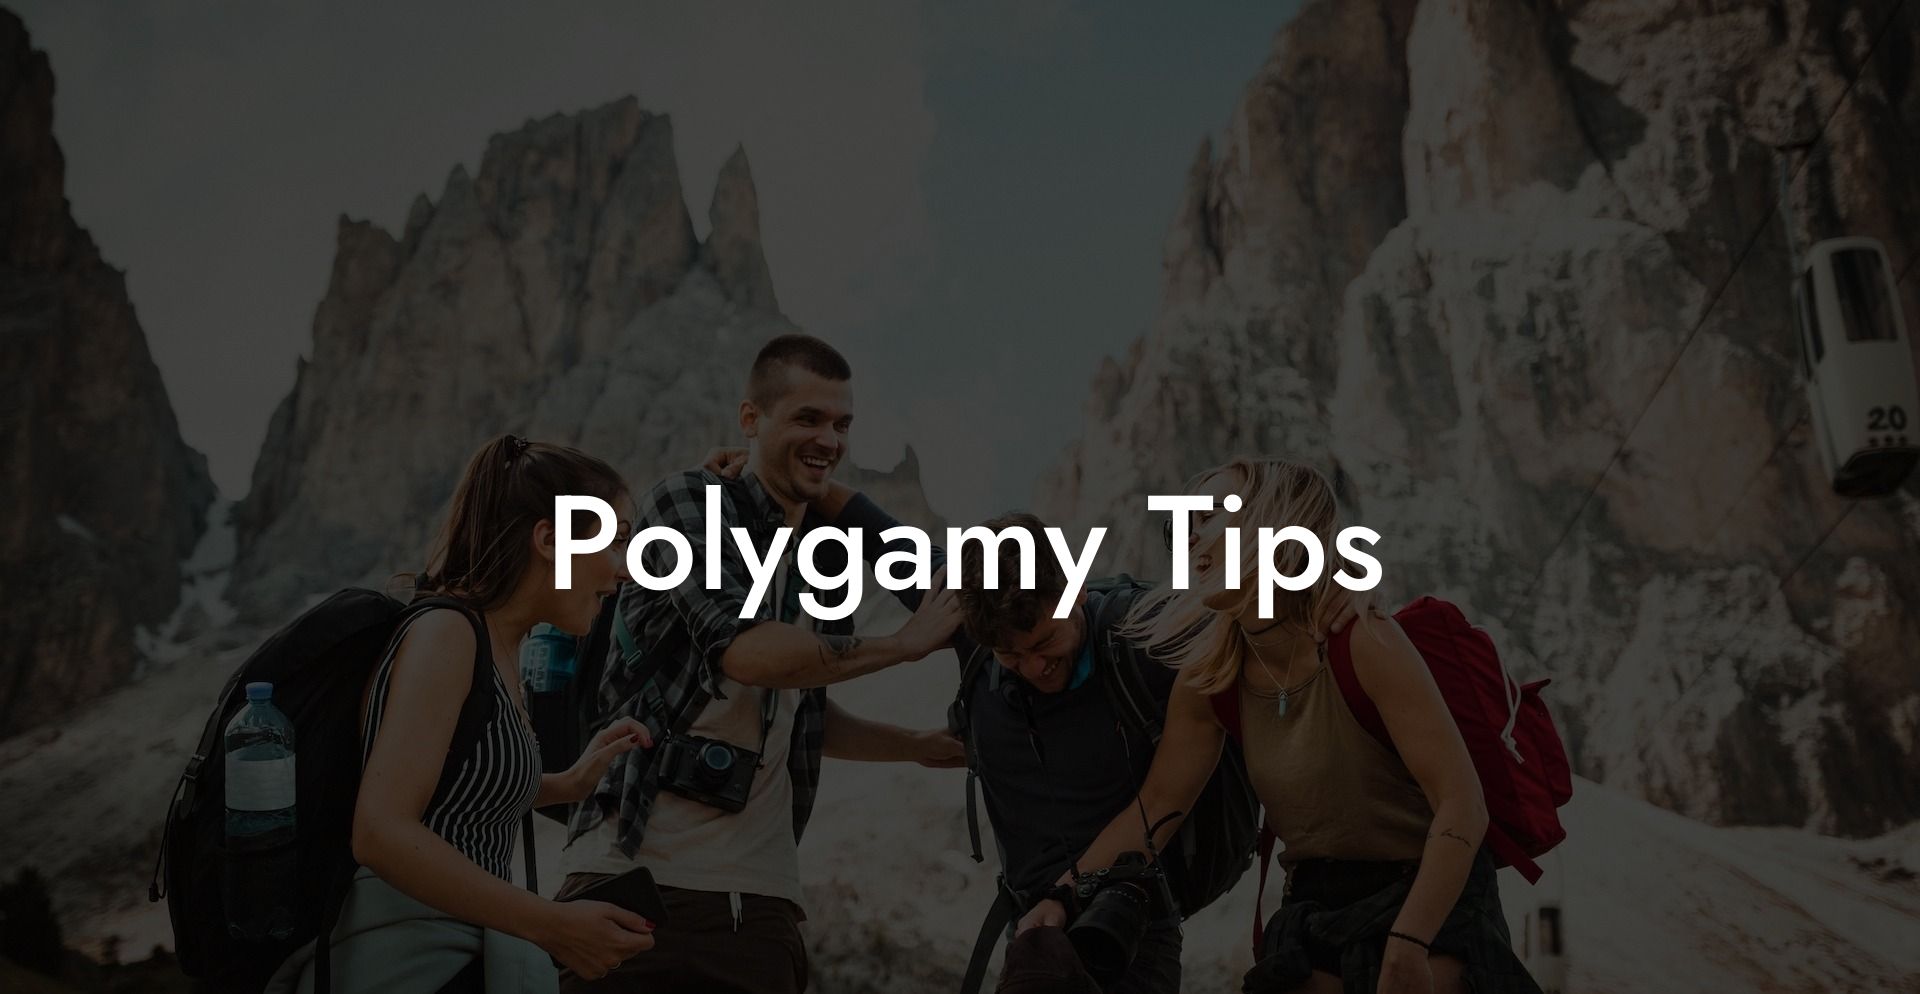 Polygamy Tips